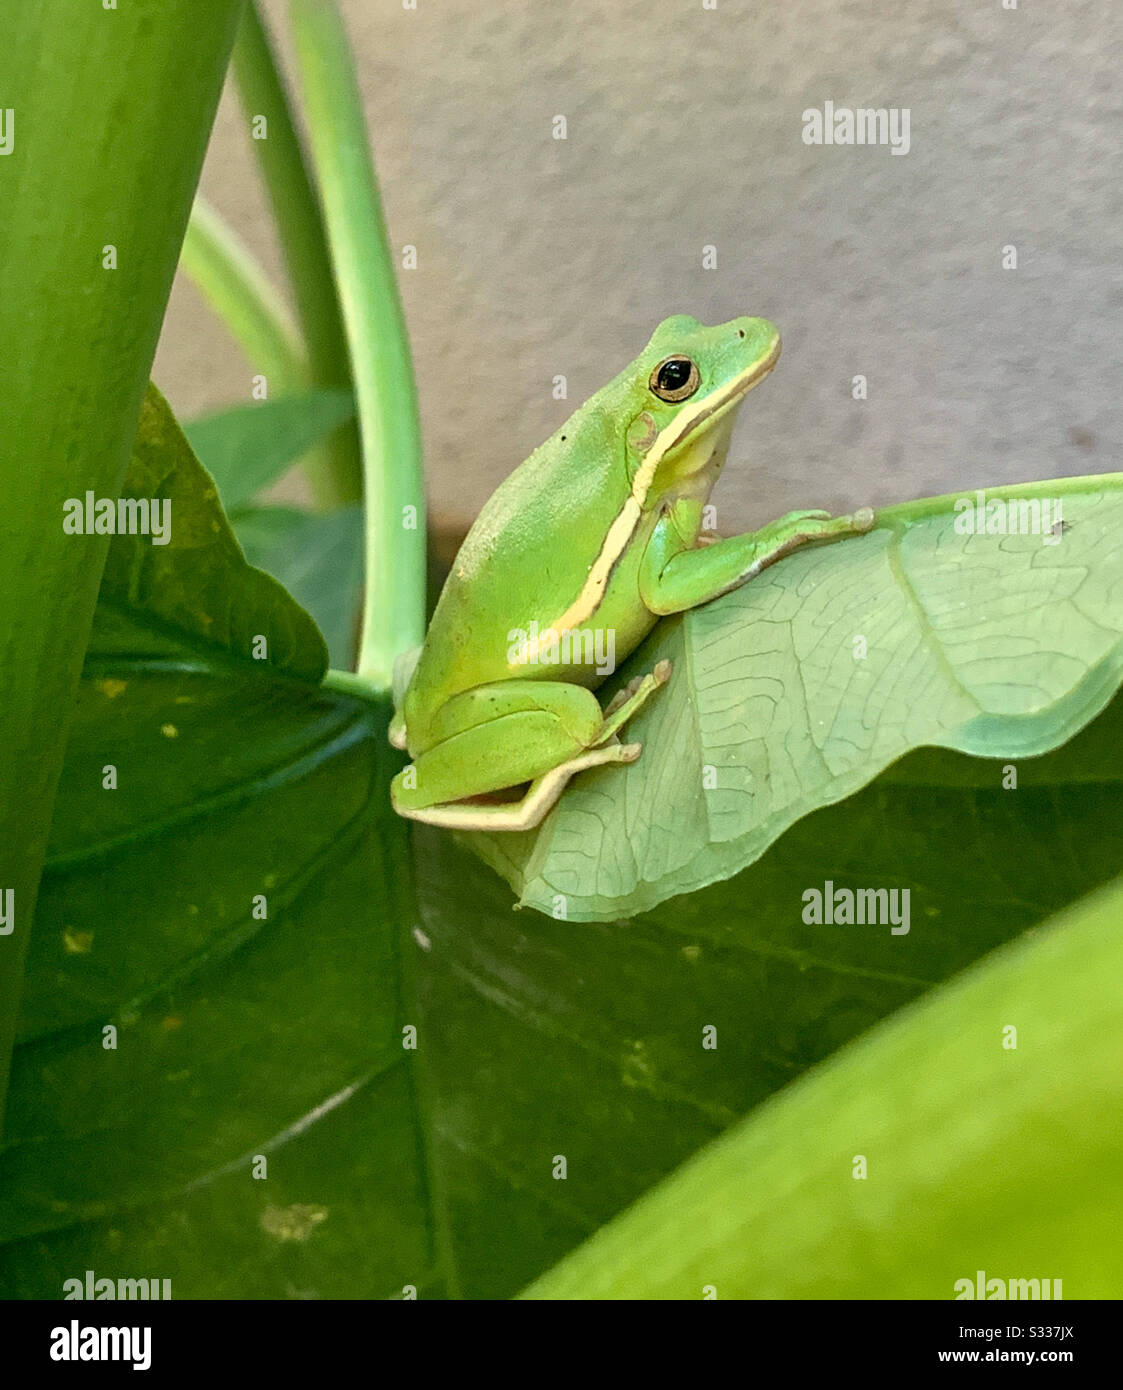 Little green tree frog setting on large green elephant ear plant leaf Stock Photo